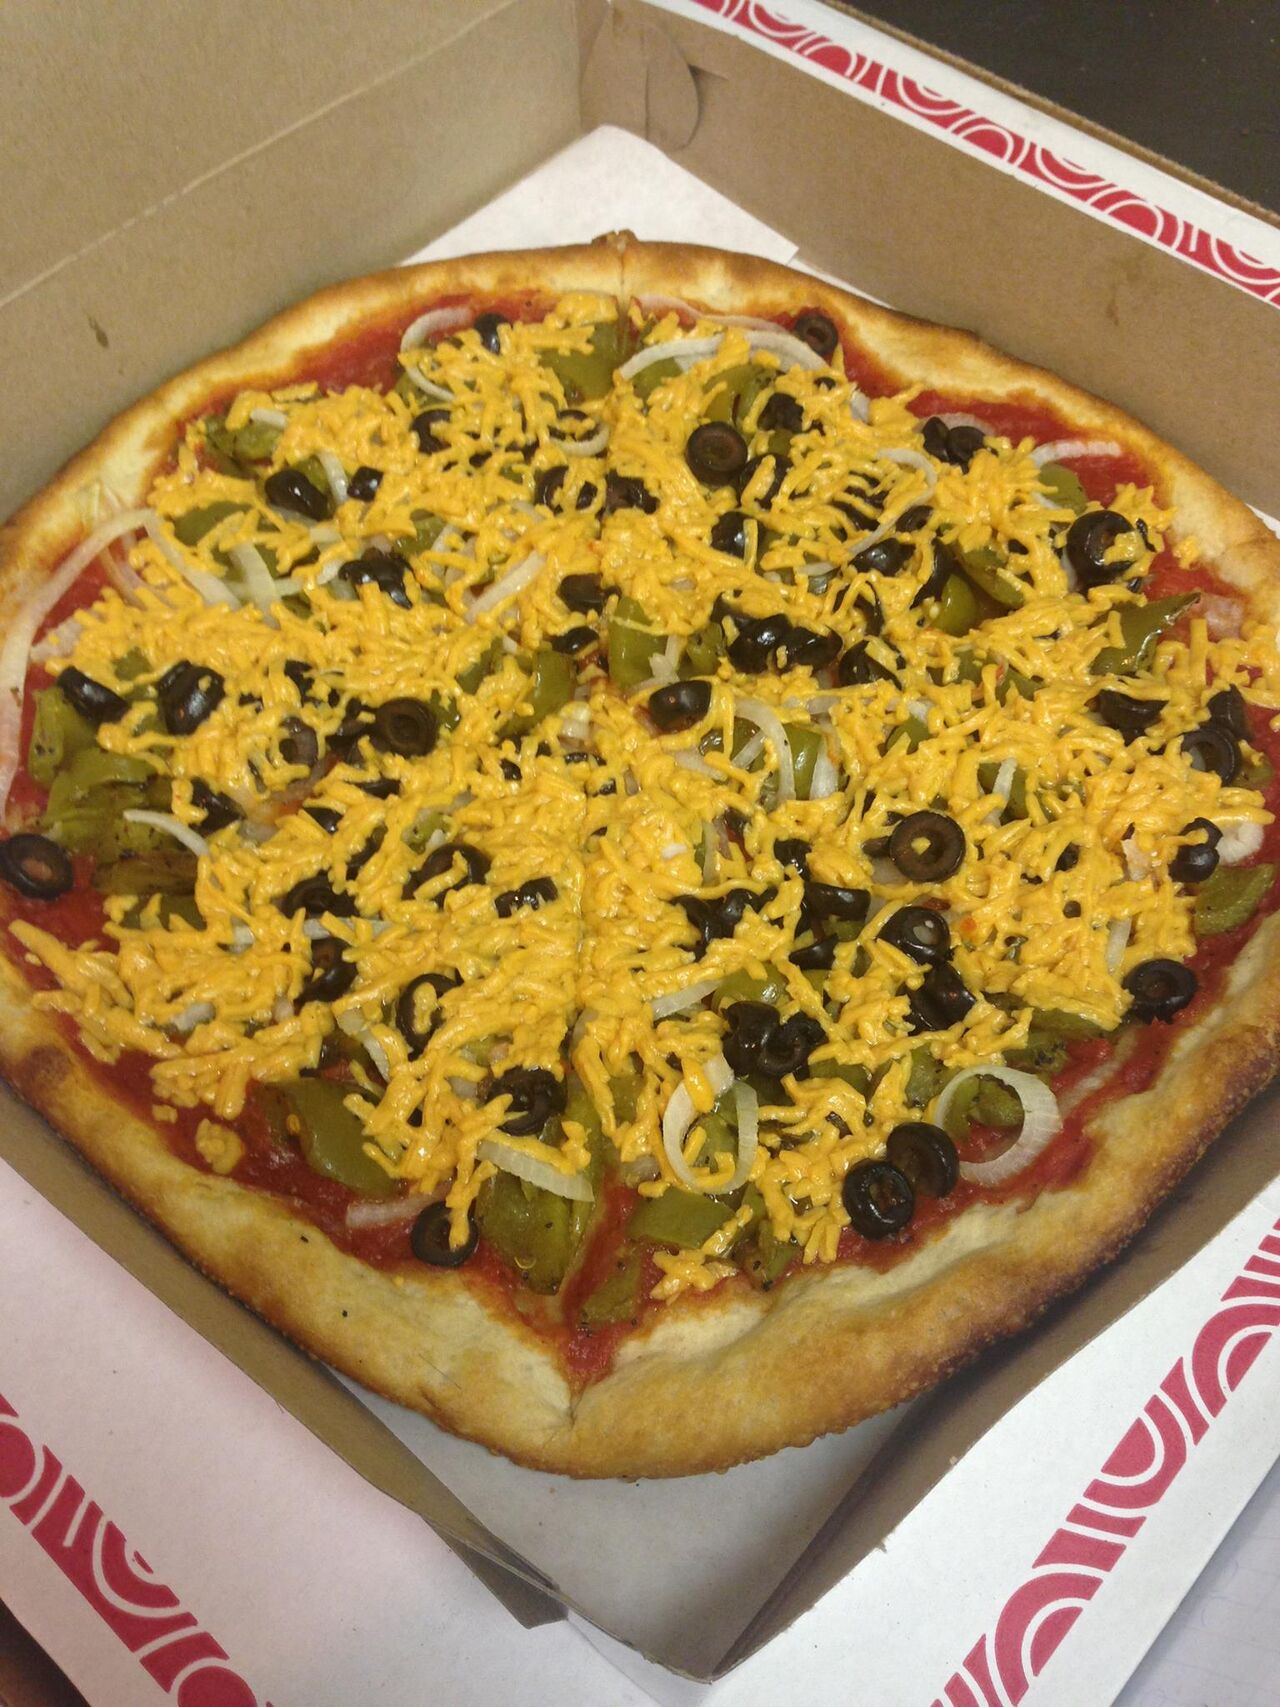 A photo of Joe's Pizza